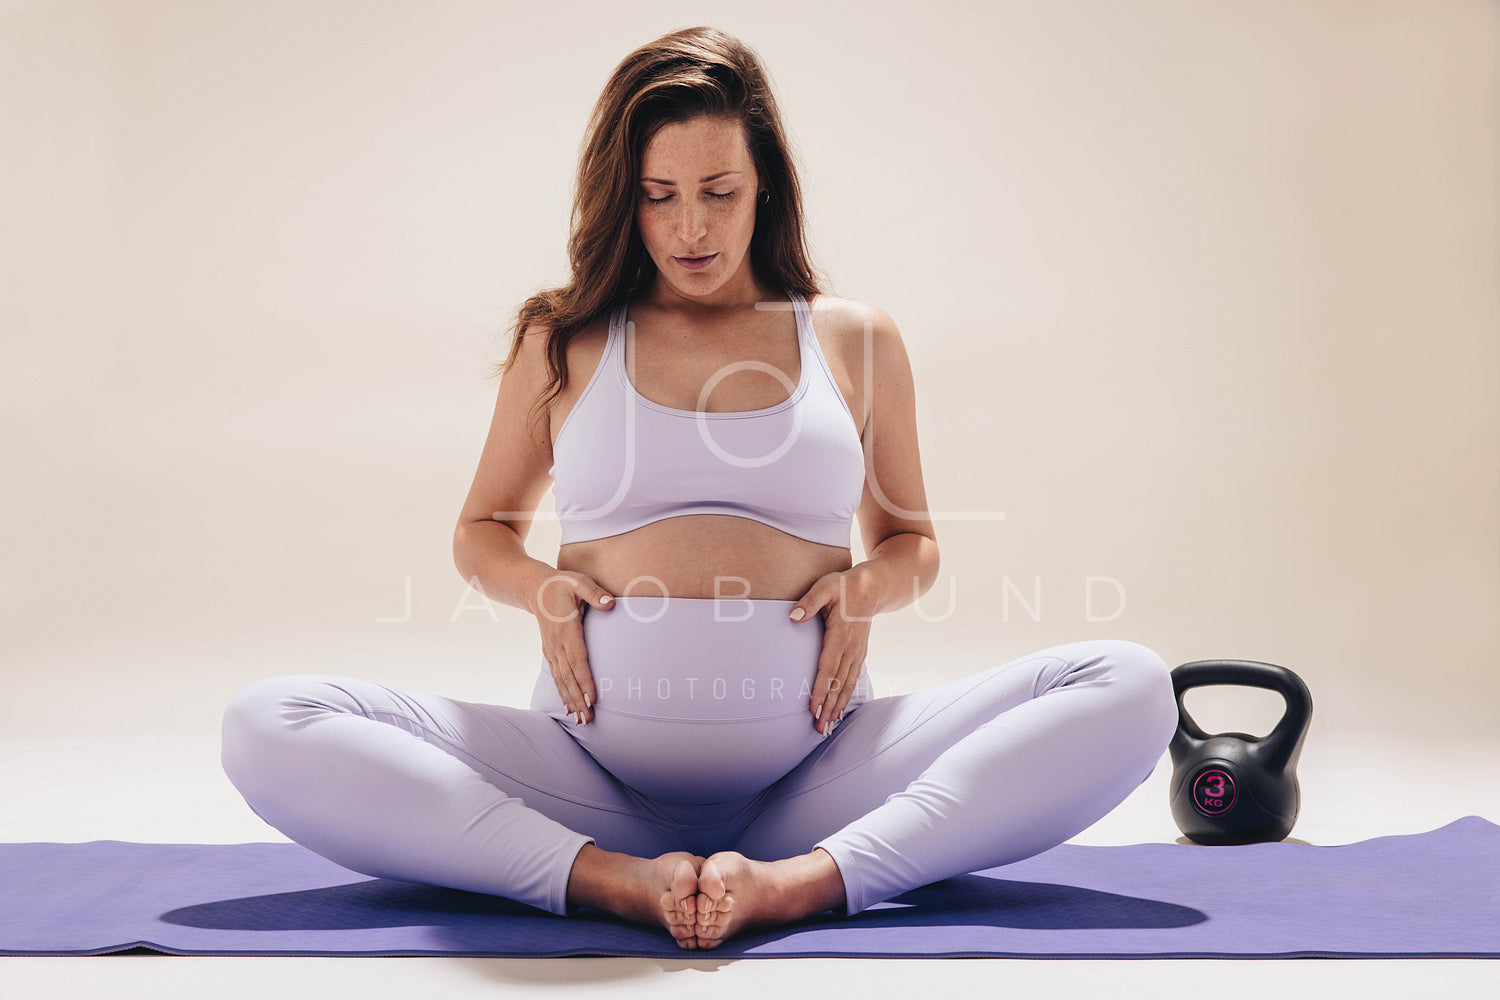 Prenatal Yoga Teacher Training Tips and Poses for Pregnancy